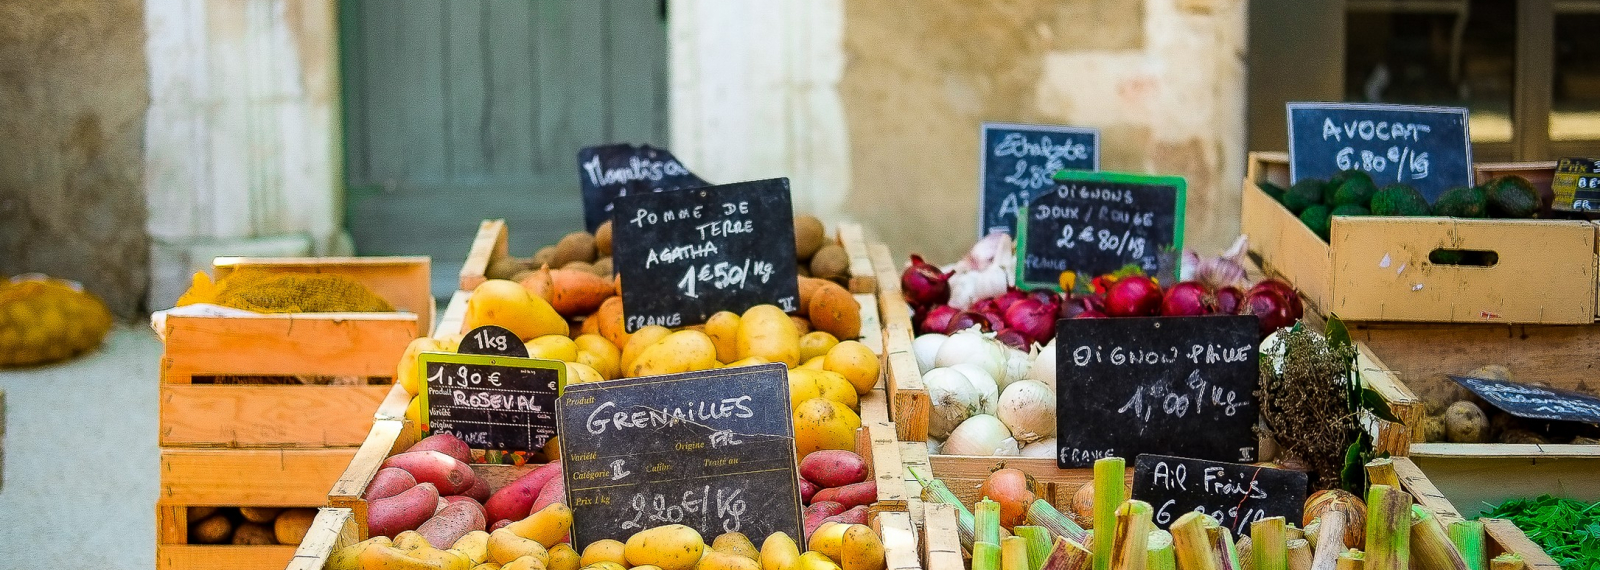 Weekly Provencal market in Eygalières